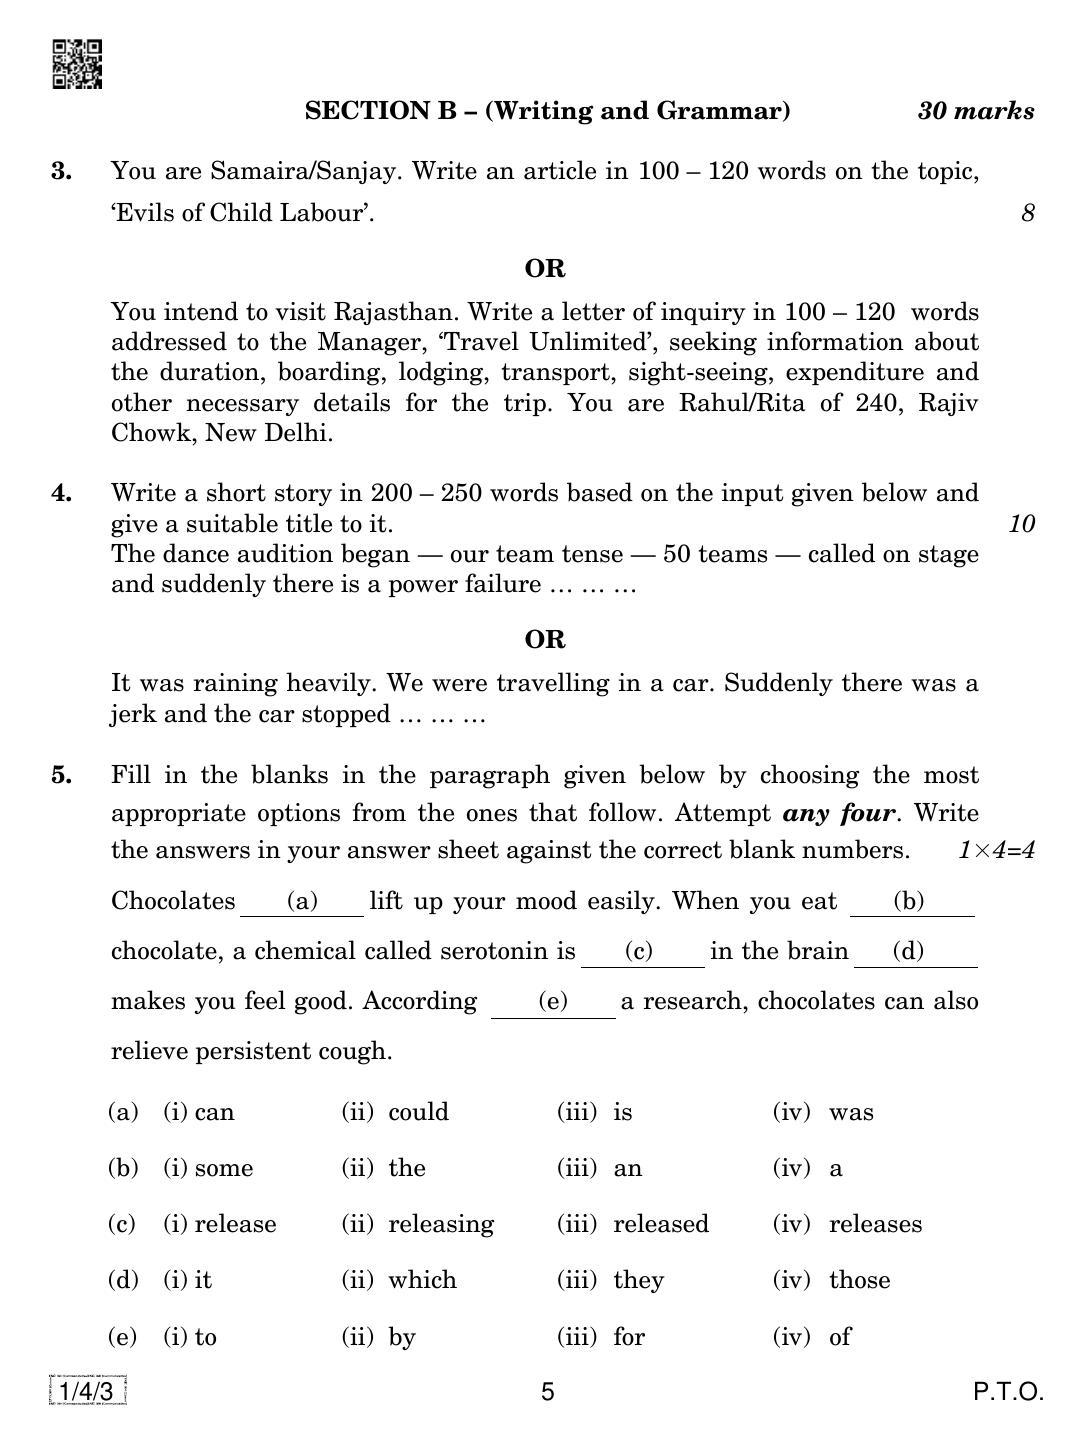 CBSE Class 10 1-4-3 ENGLISH COMMUNICATIVE 2019 Question Paper - Page 5